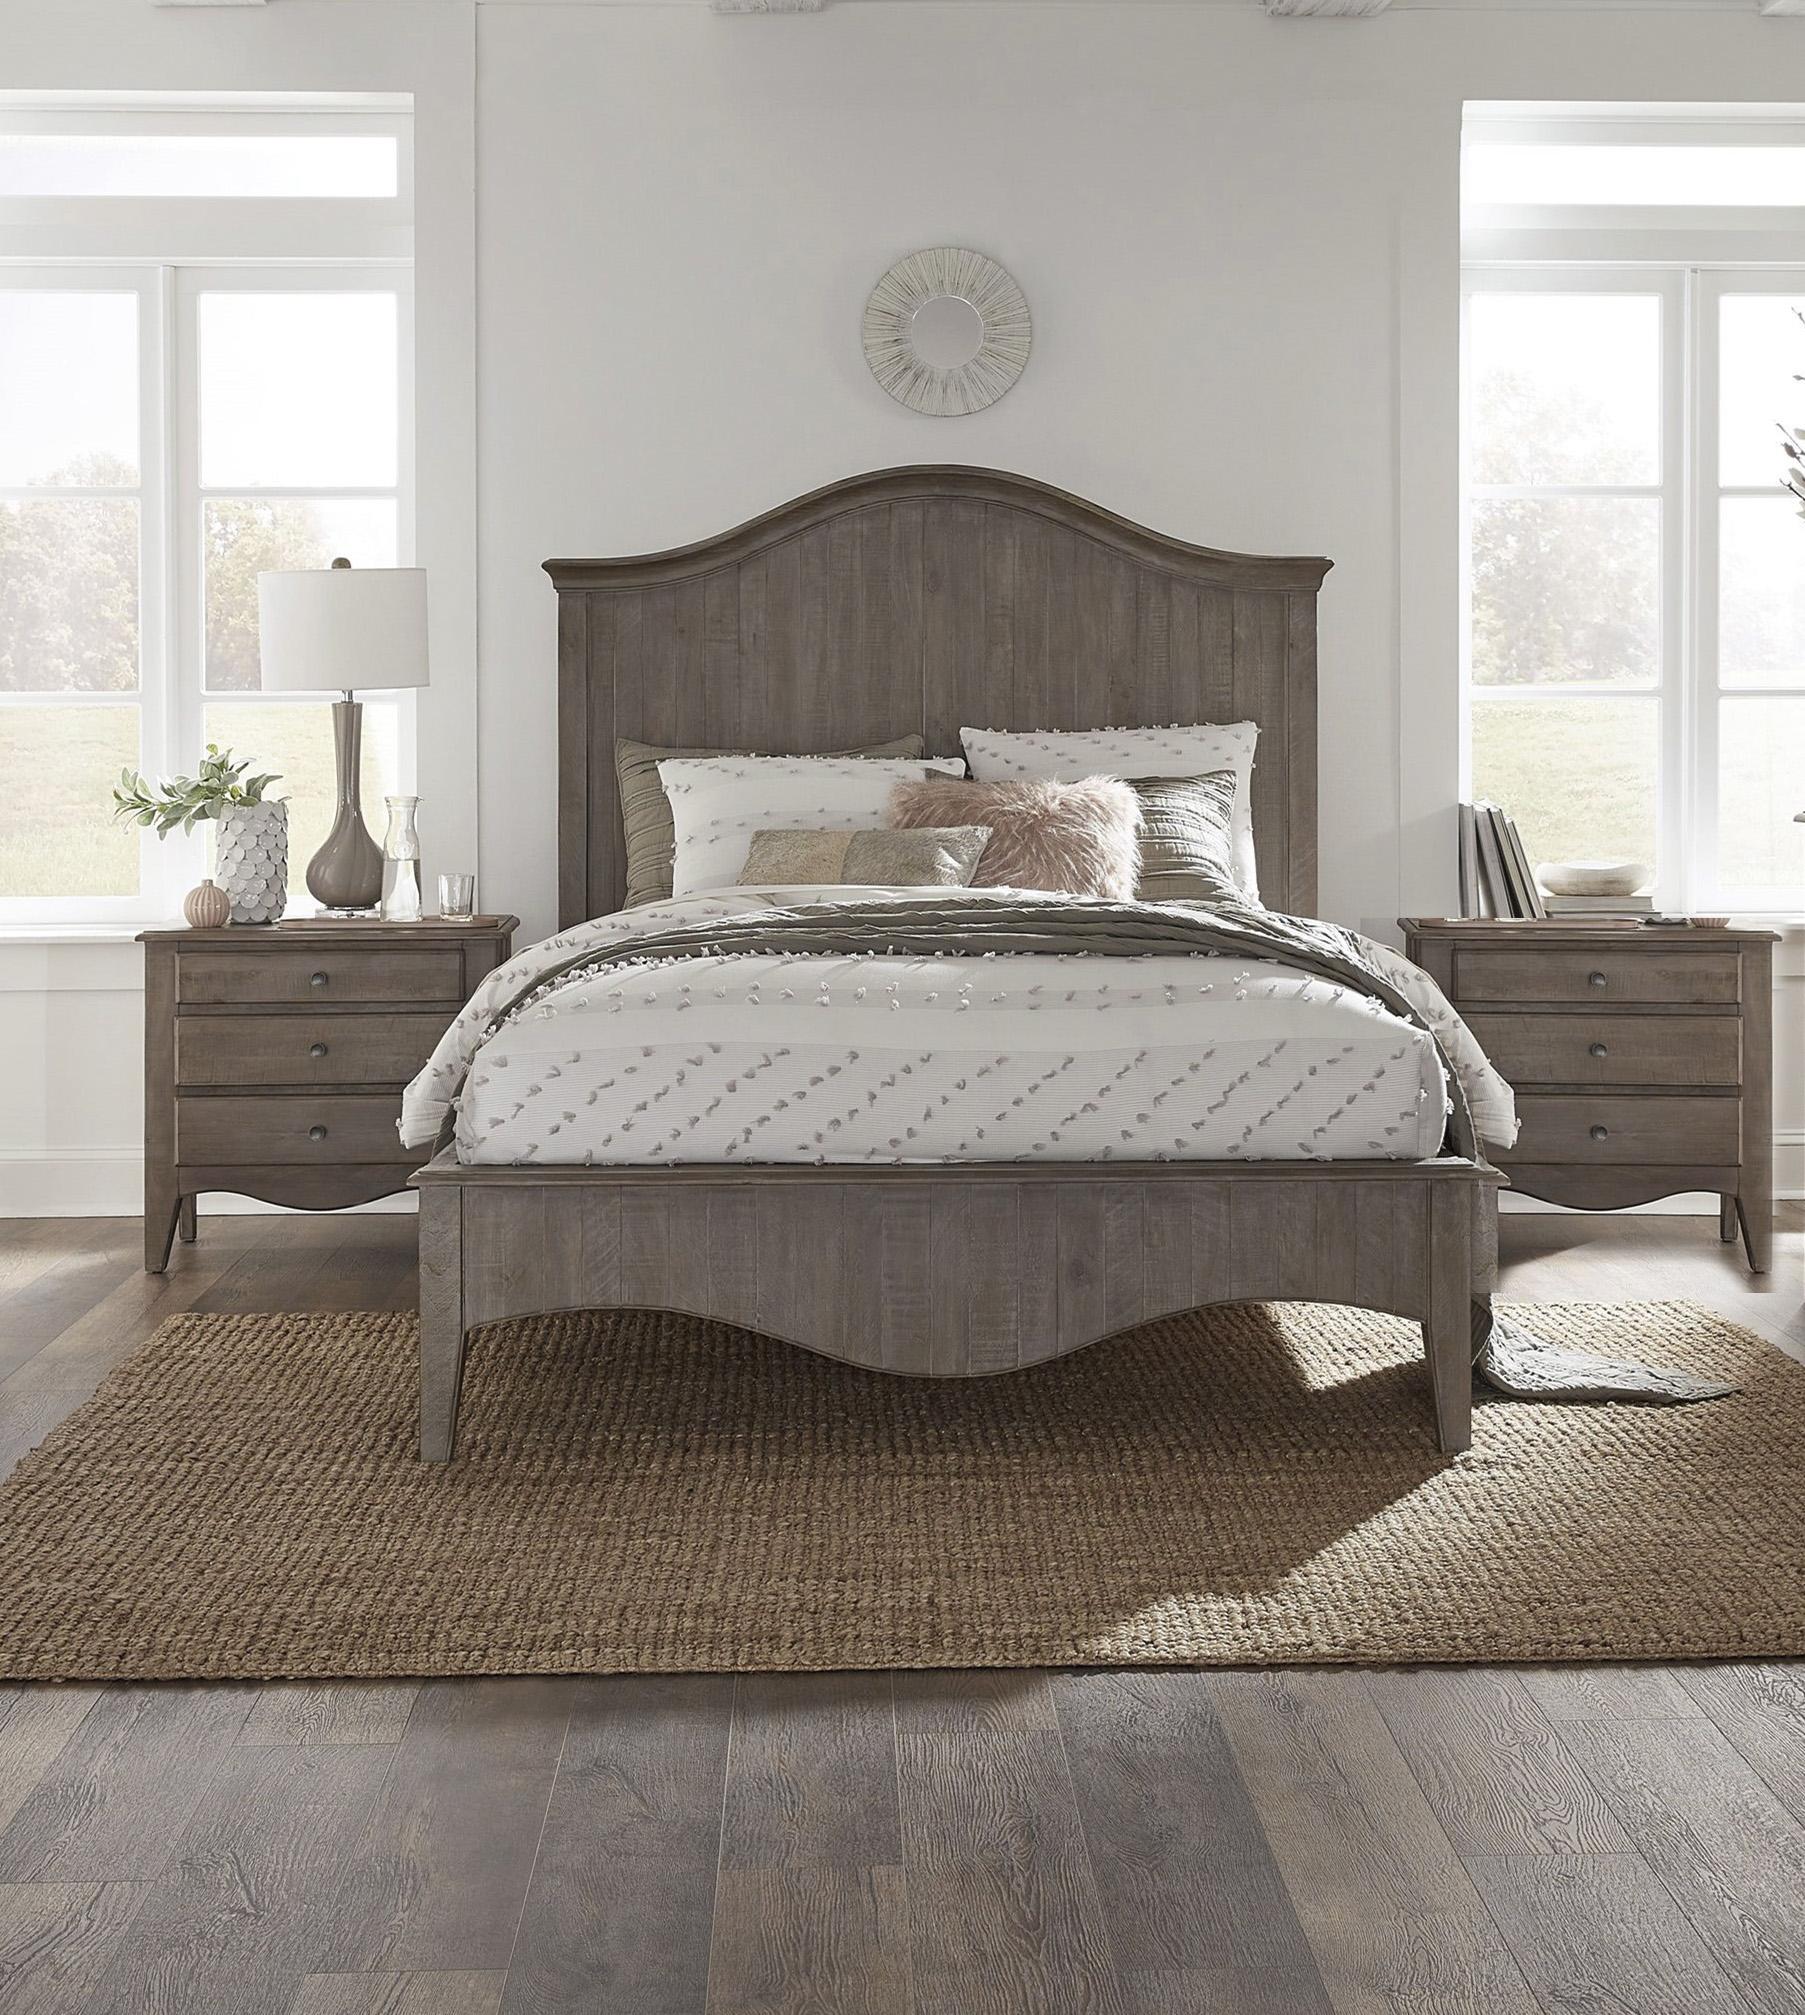 Shop New Bedroom Furniture Online